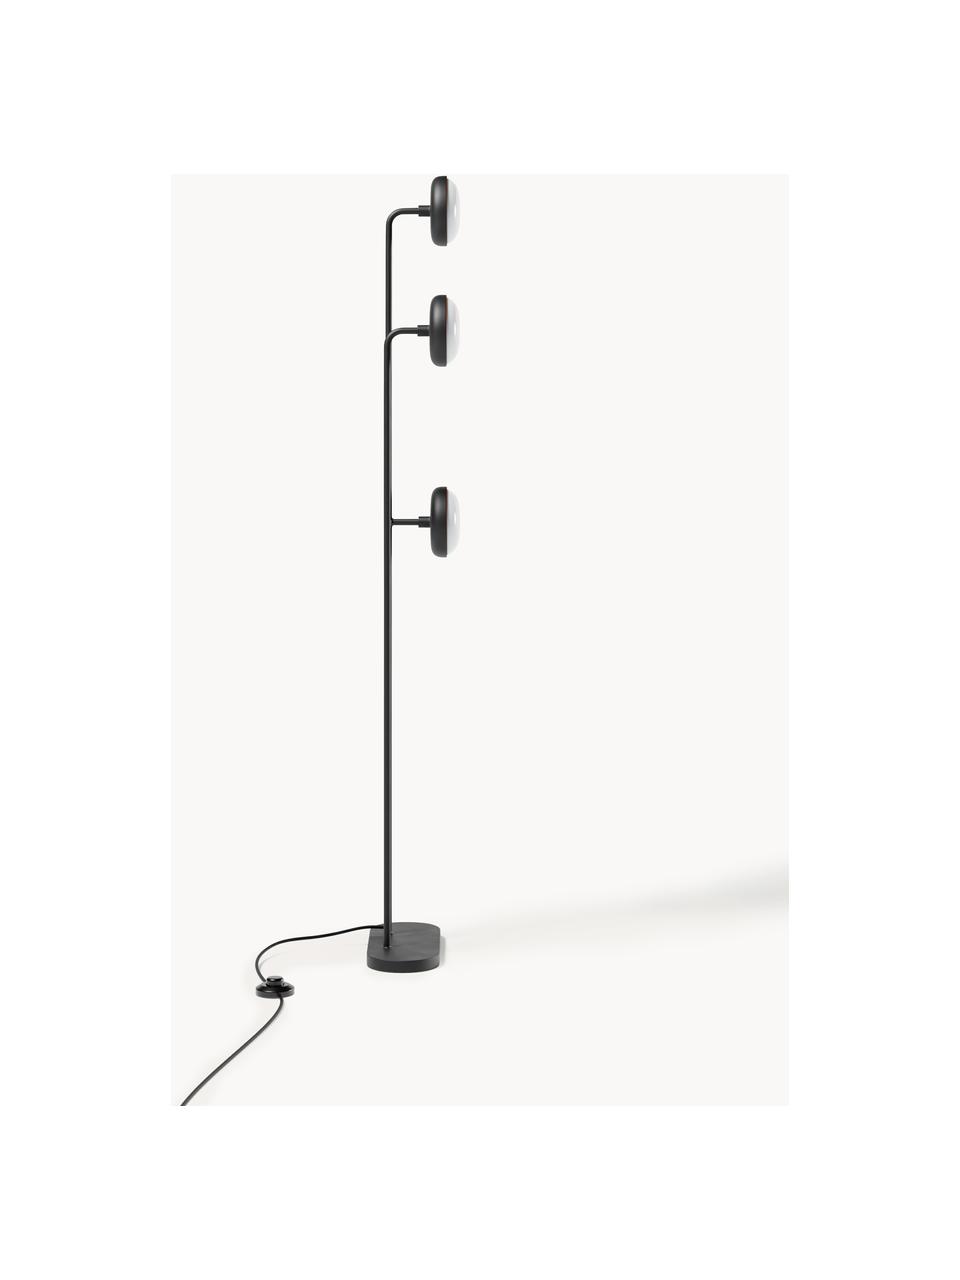 Lámpara de pie LED regulable James, Pantalla: vidrio opalino, Estructura: metal, Cable: cubierto en tela, Negro mate, Al 130 cm